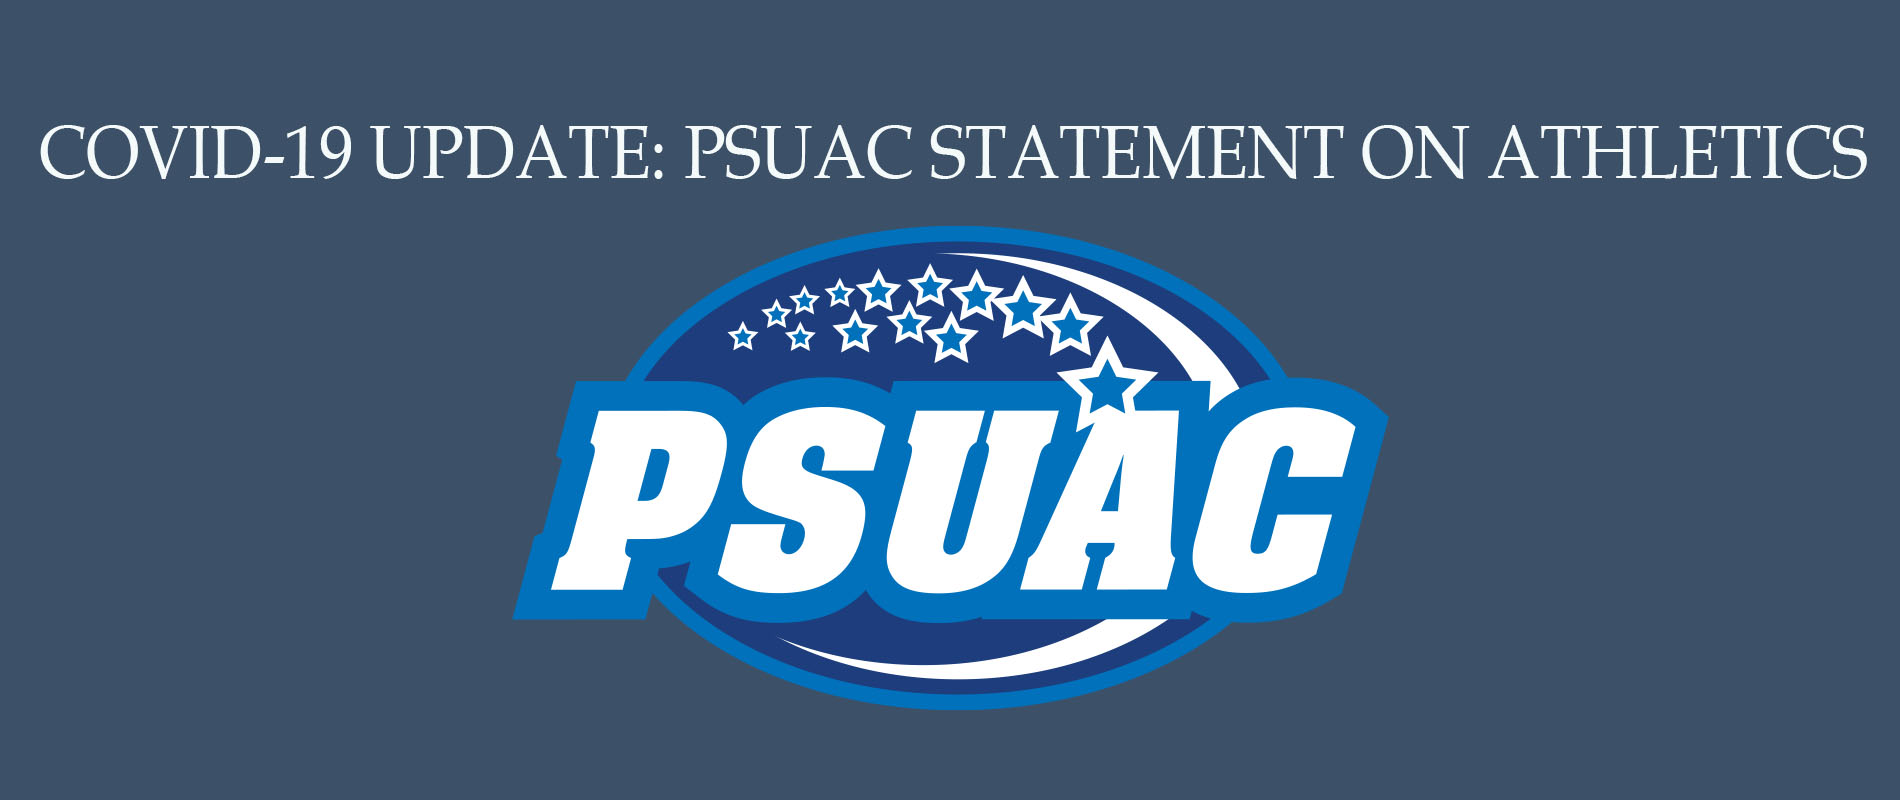 PSUAC Statement on Athletics graphic.